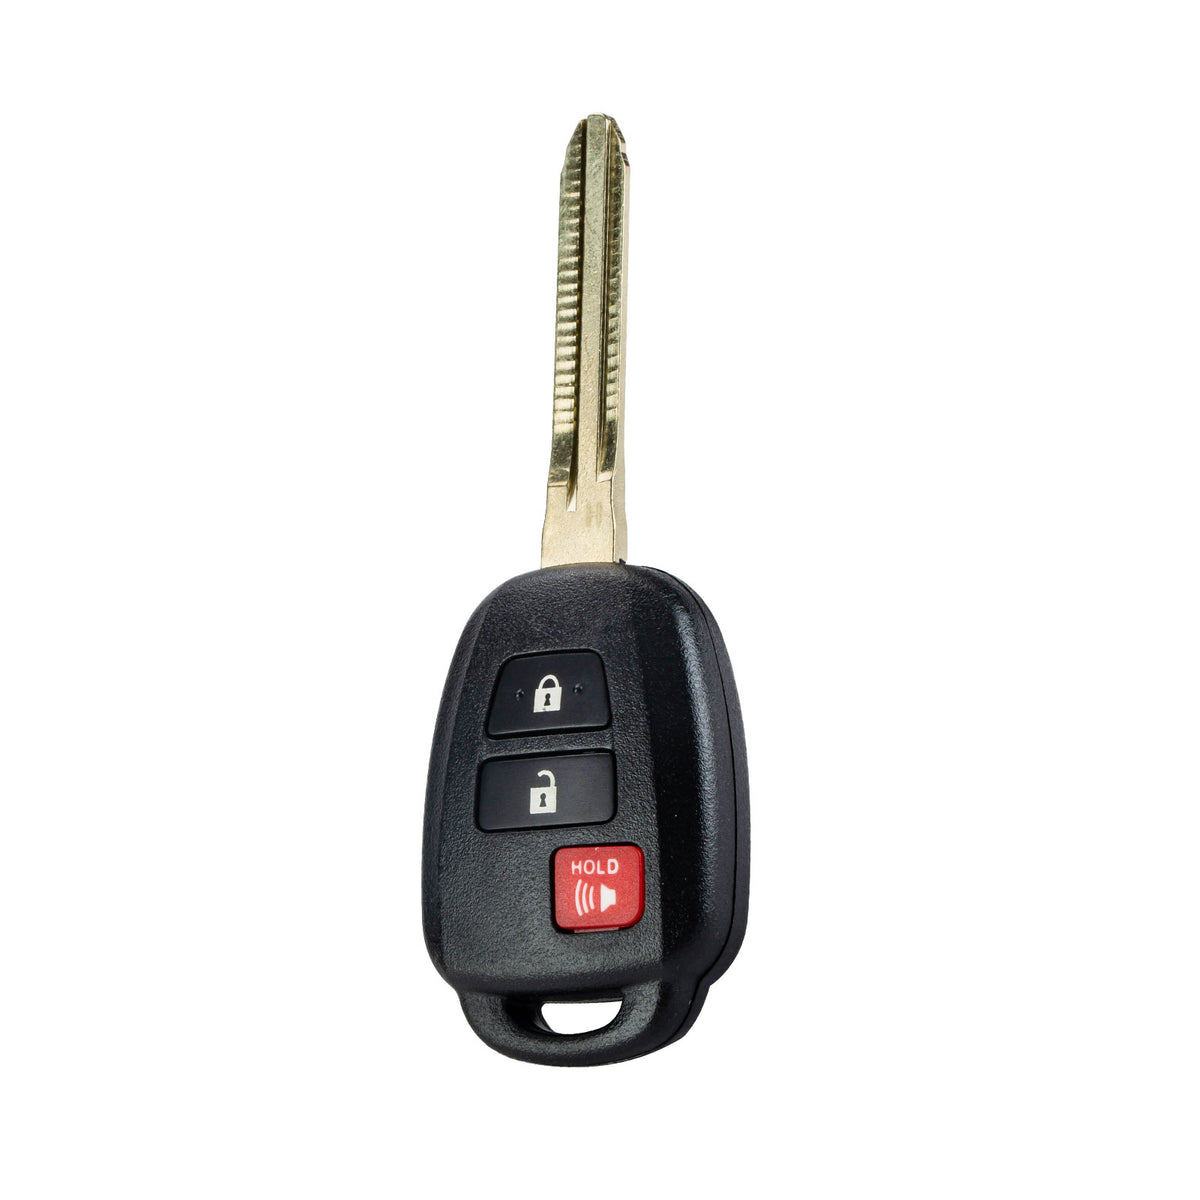 3 BTN Keyless Entry Remote Car Key Replacement for 2013-2015 Toyota Rav4 2014-2016 Prius C V H Chip HYQ12BEL KR-T3SC